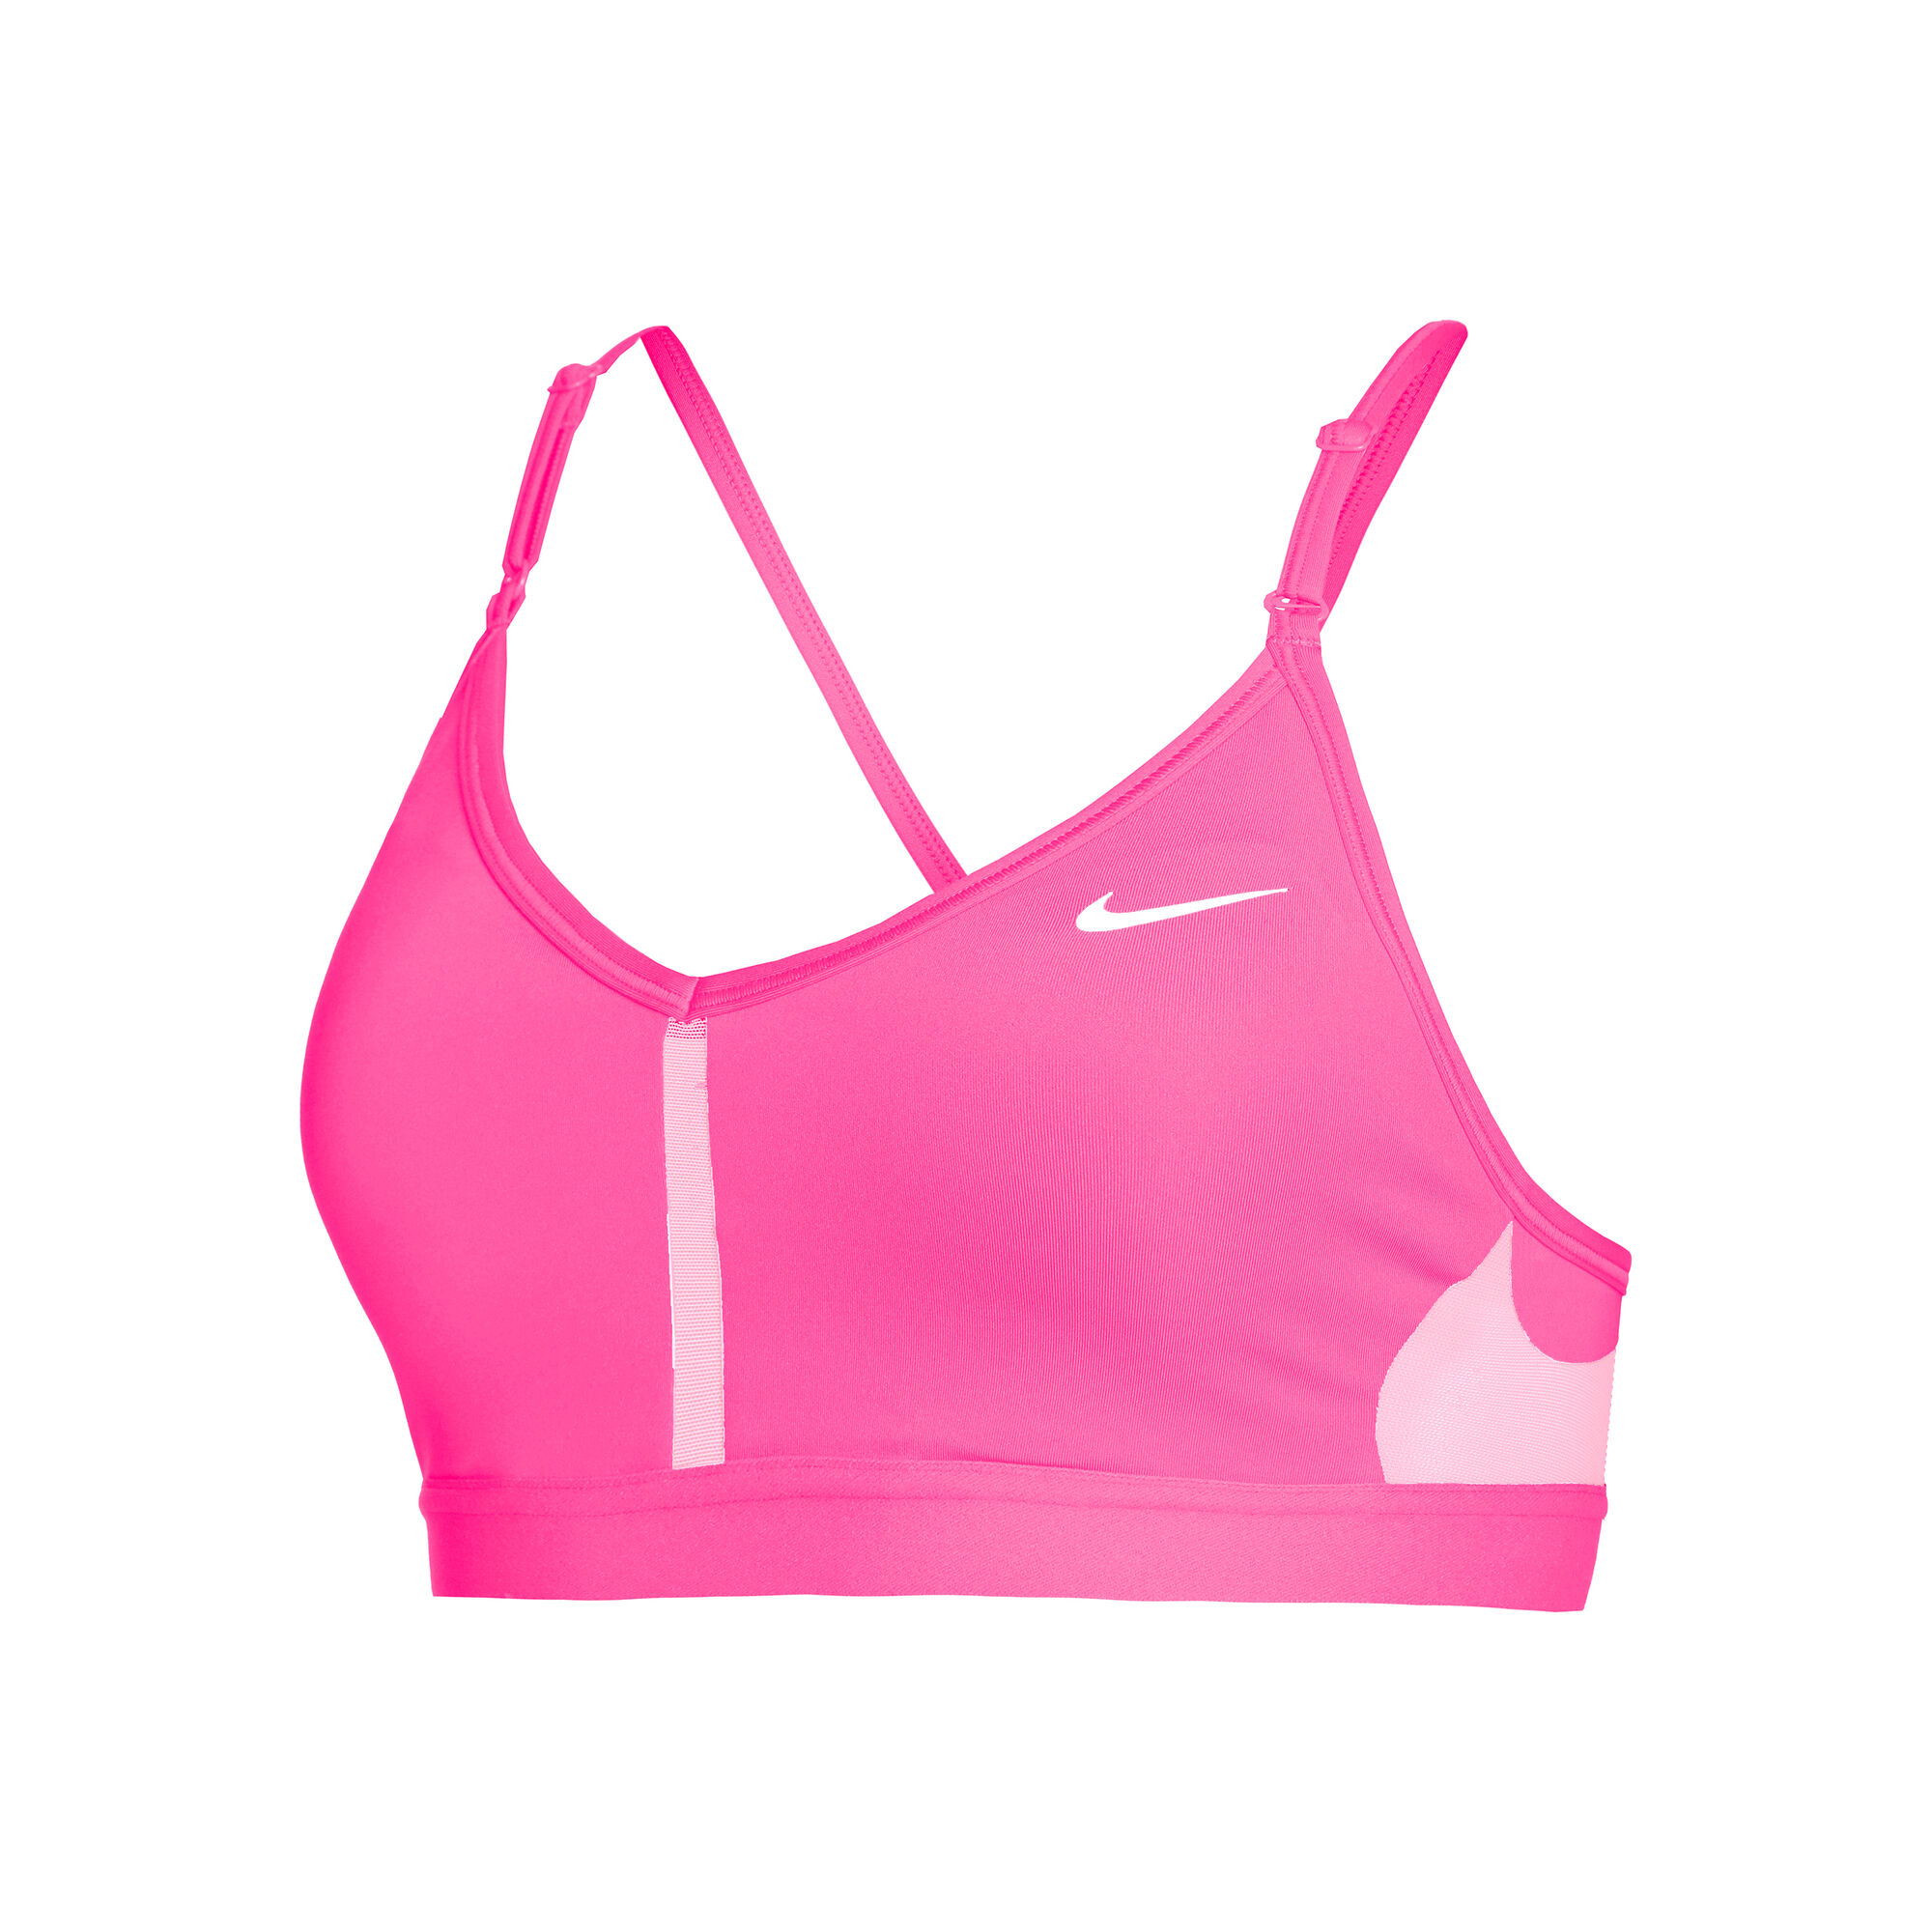 Nike Bandeau Sports Bra Pink - $30 (45% Off Retail) - From Jasmine